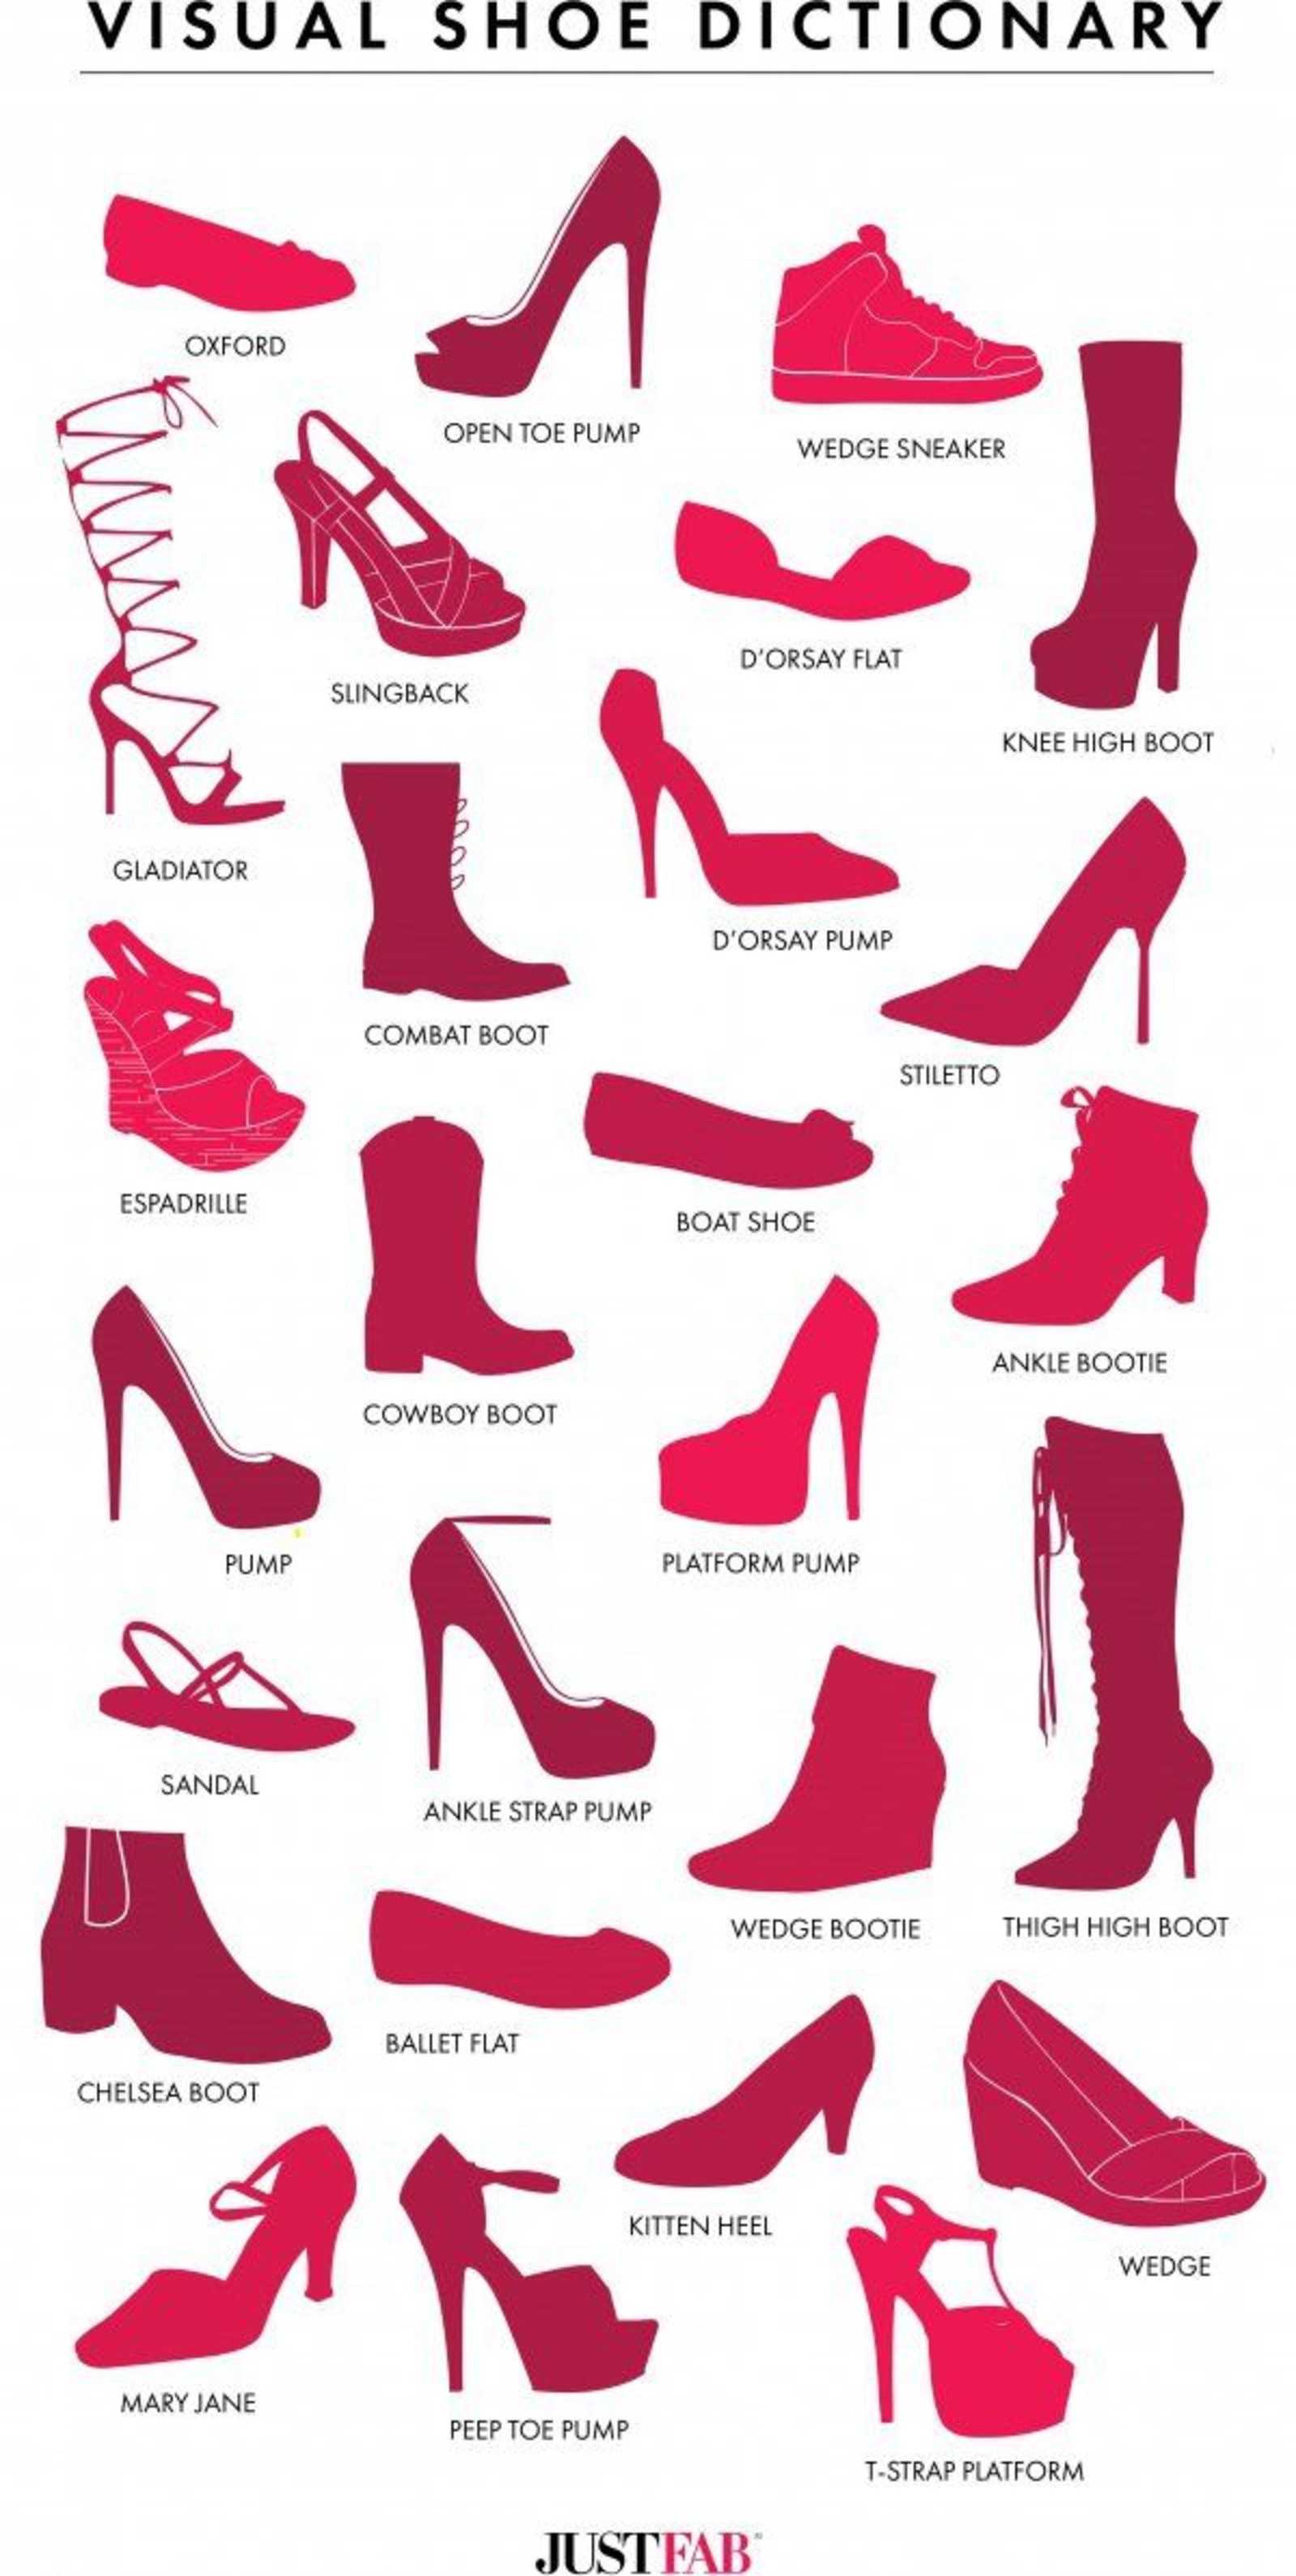 Visual Shoe Dictionary